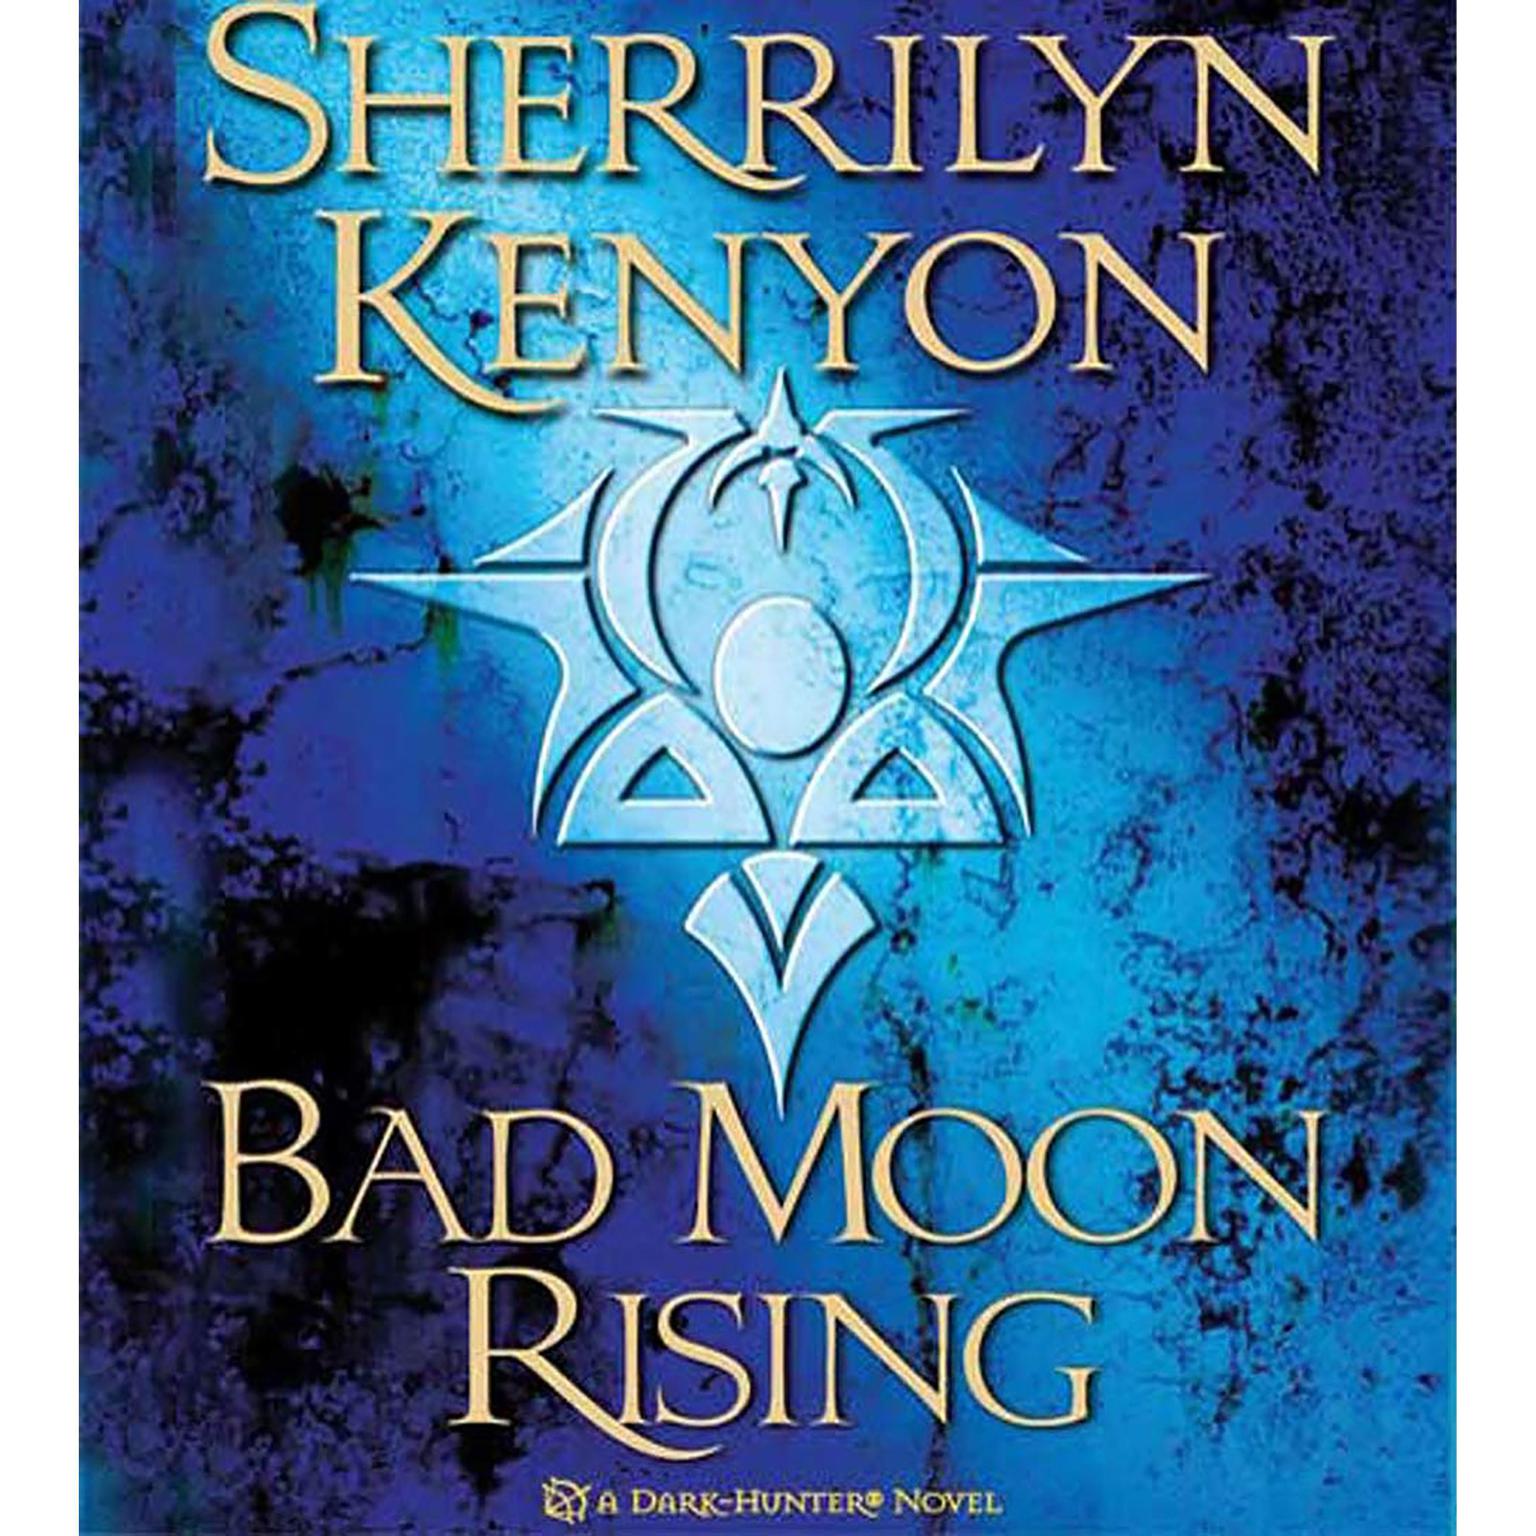 Bad Moon Rising: A Dark-Hunter Novel Audiobook, by Sherrilyn Kenyon